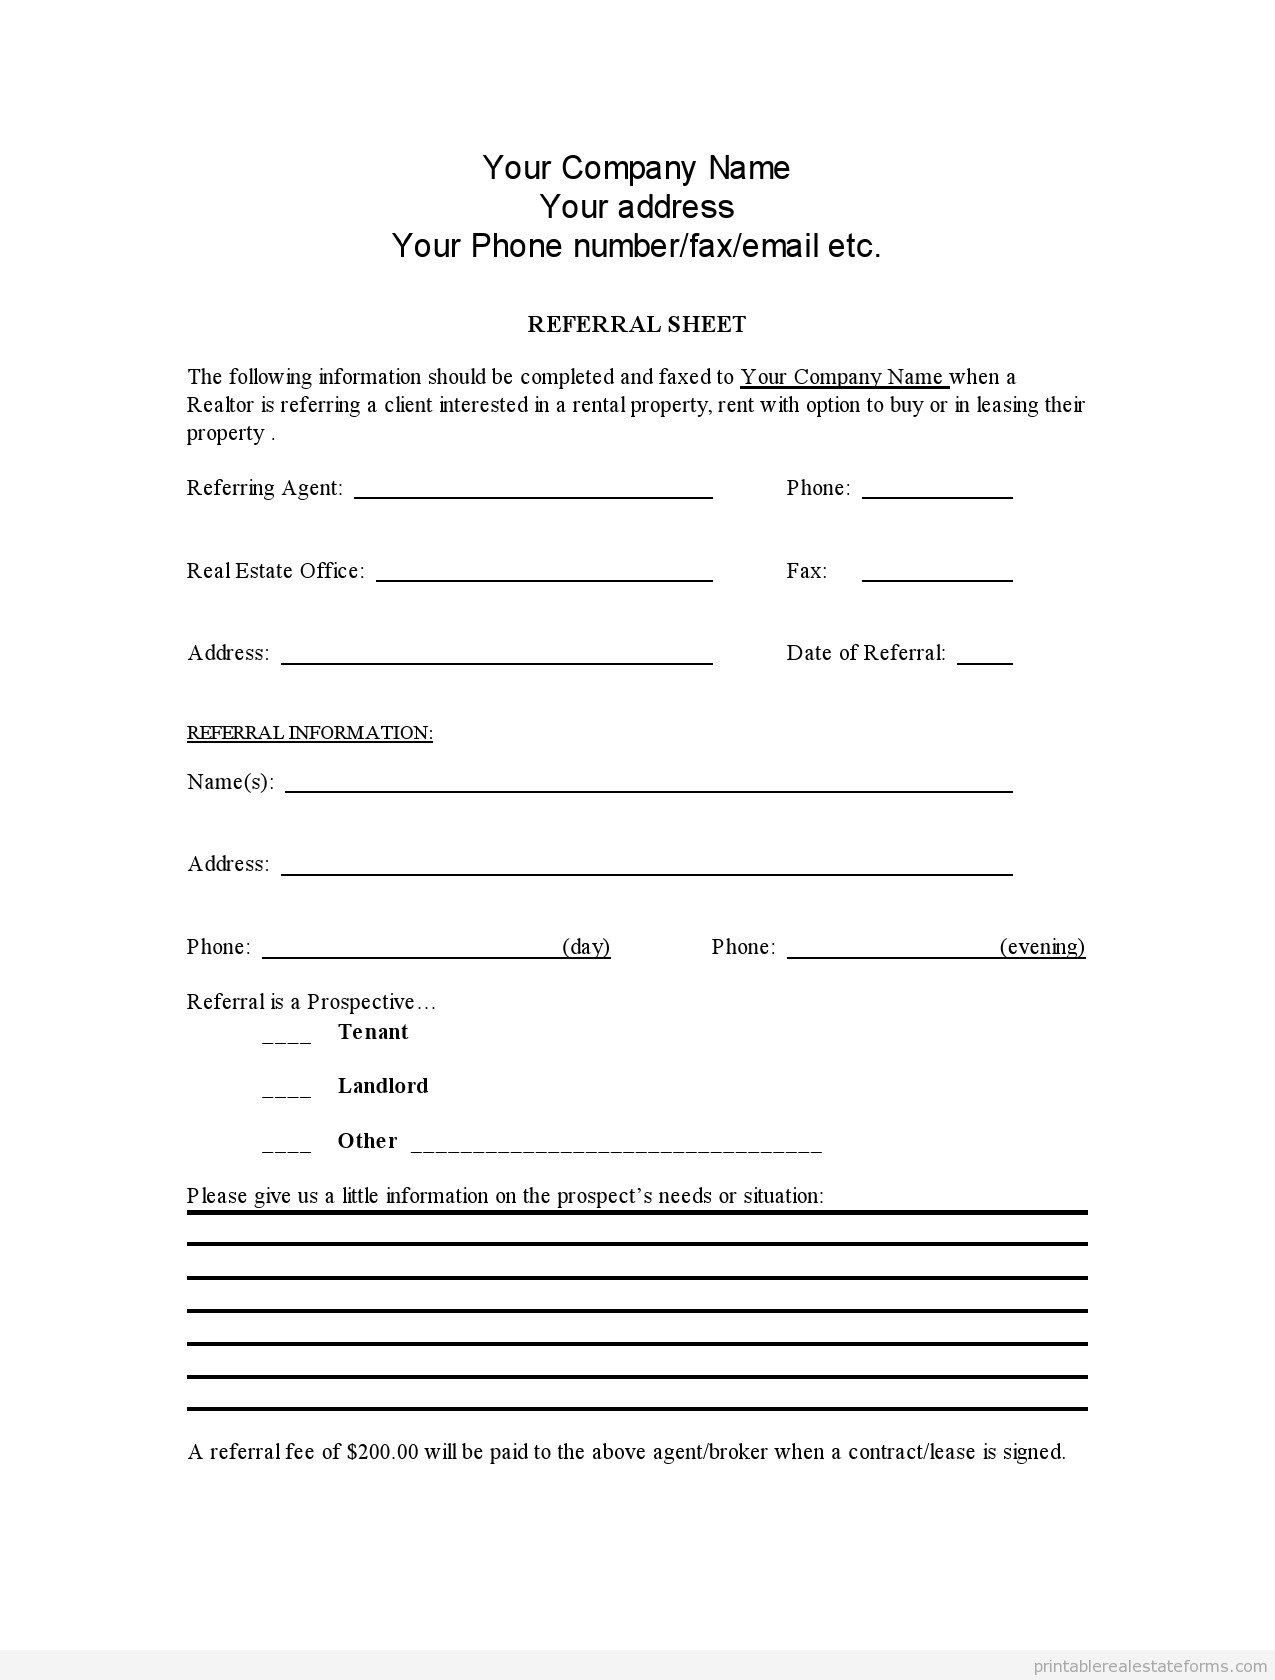 Free Printable Real Estate Referral Form Template PDF